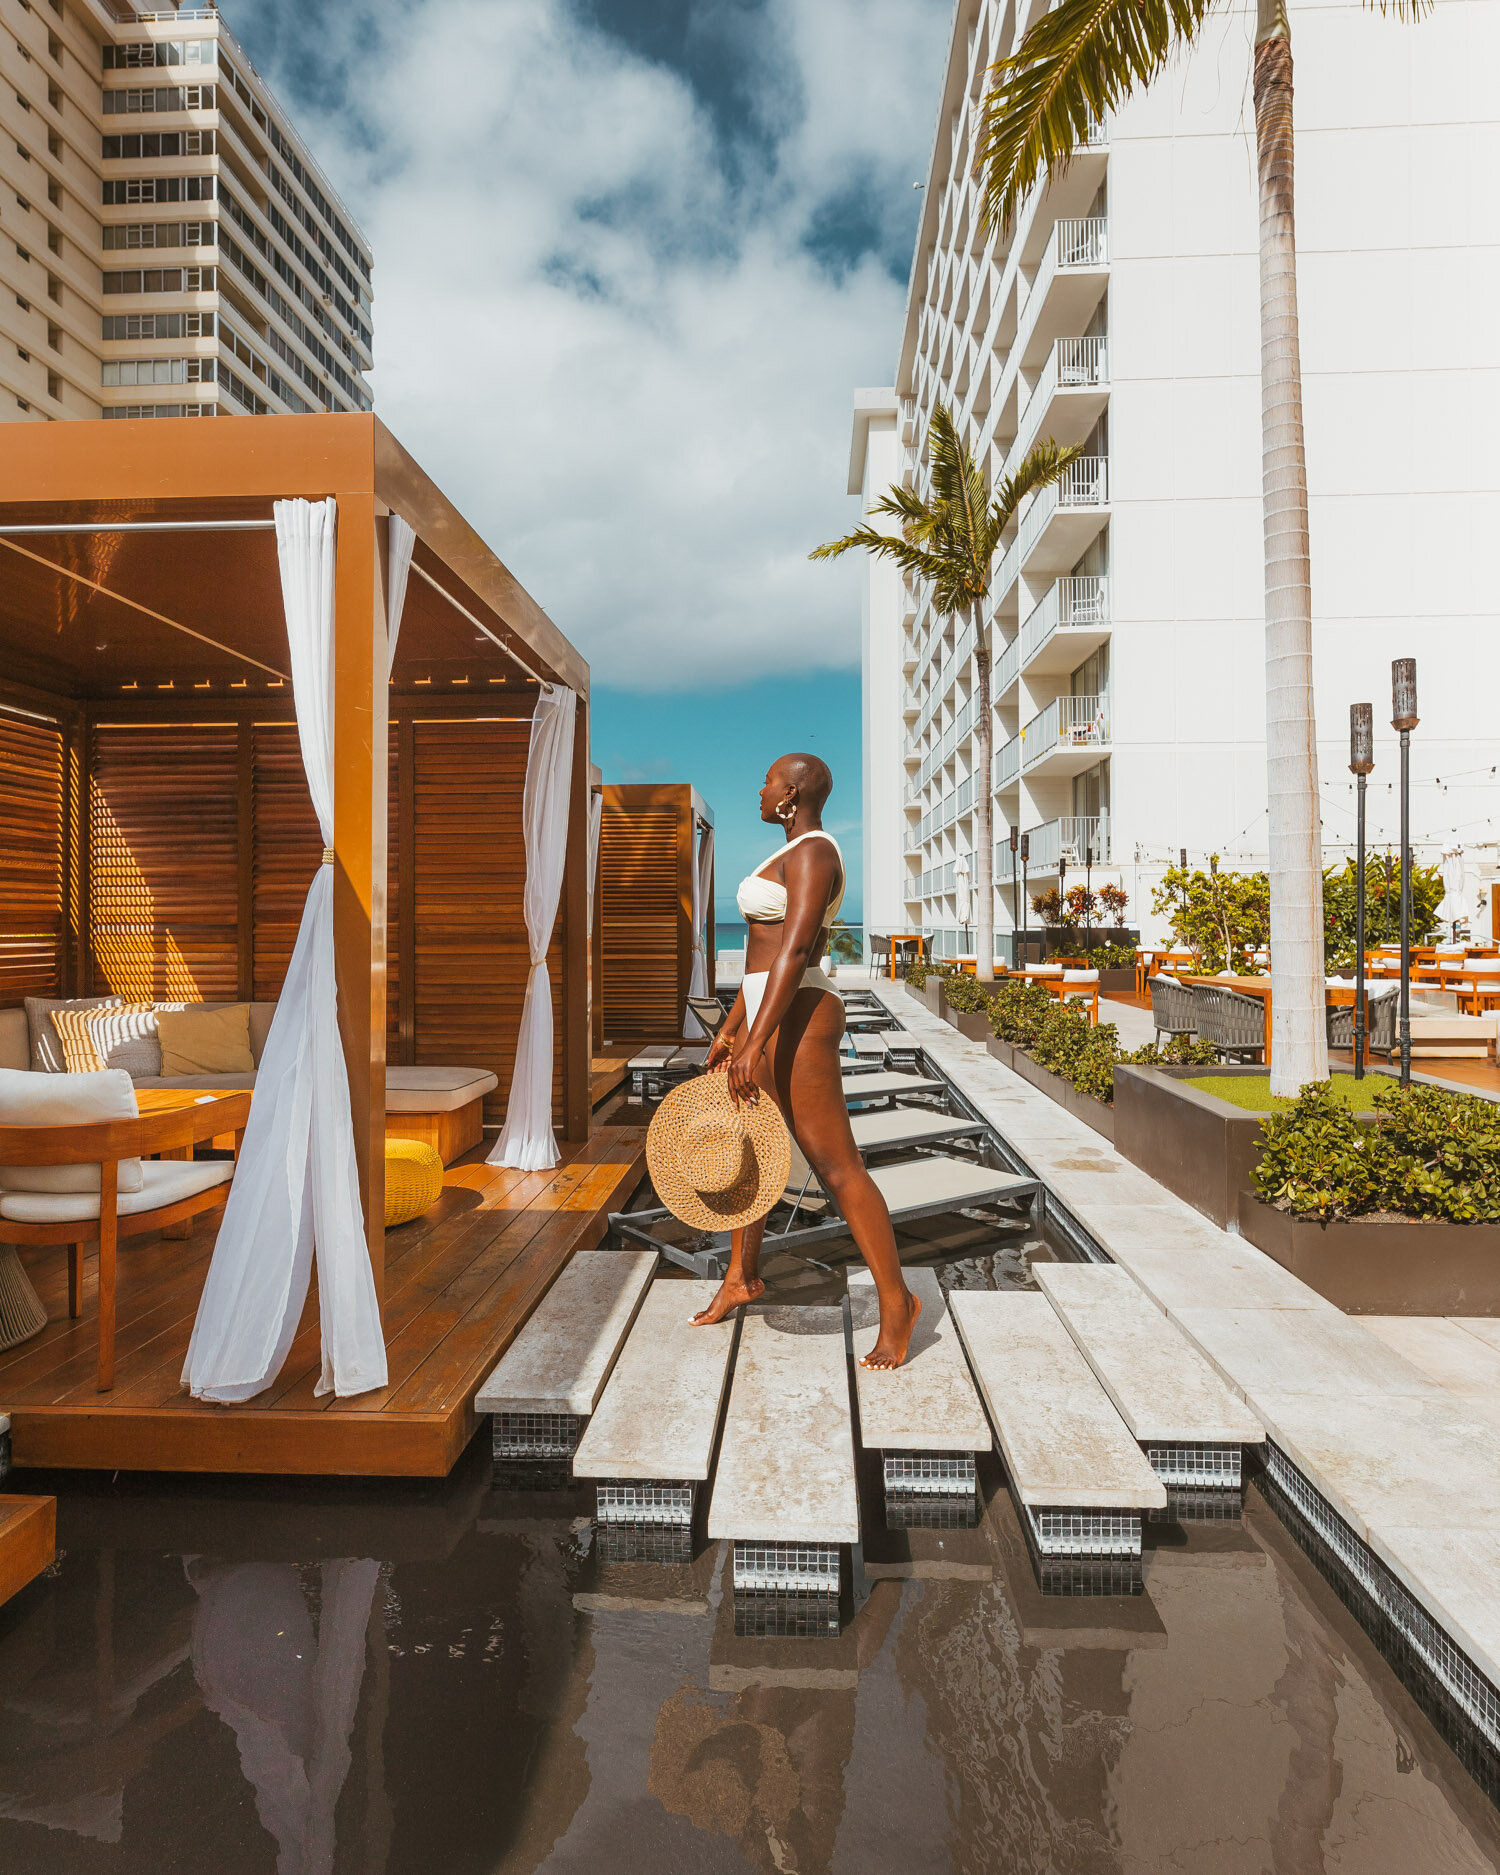 Alohilani Hotel pool cabanas; The Quick Guide to Visiting Oahu, Hawaii